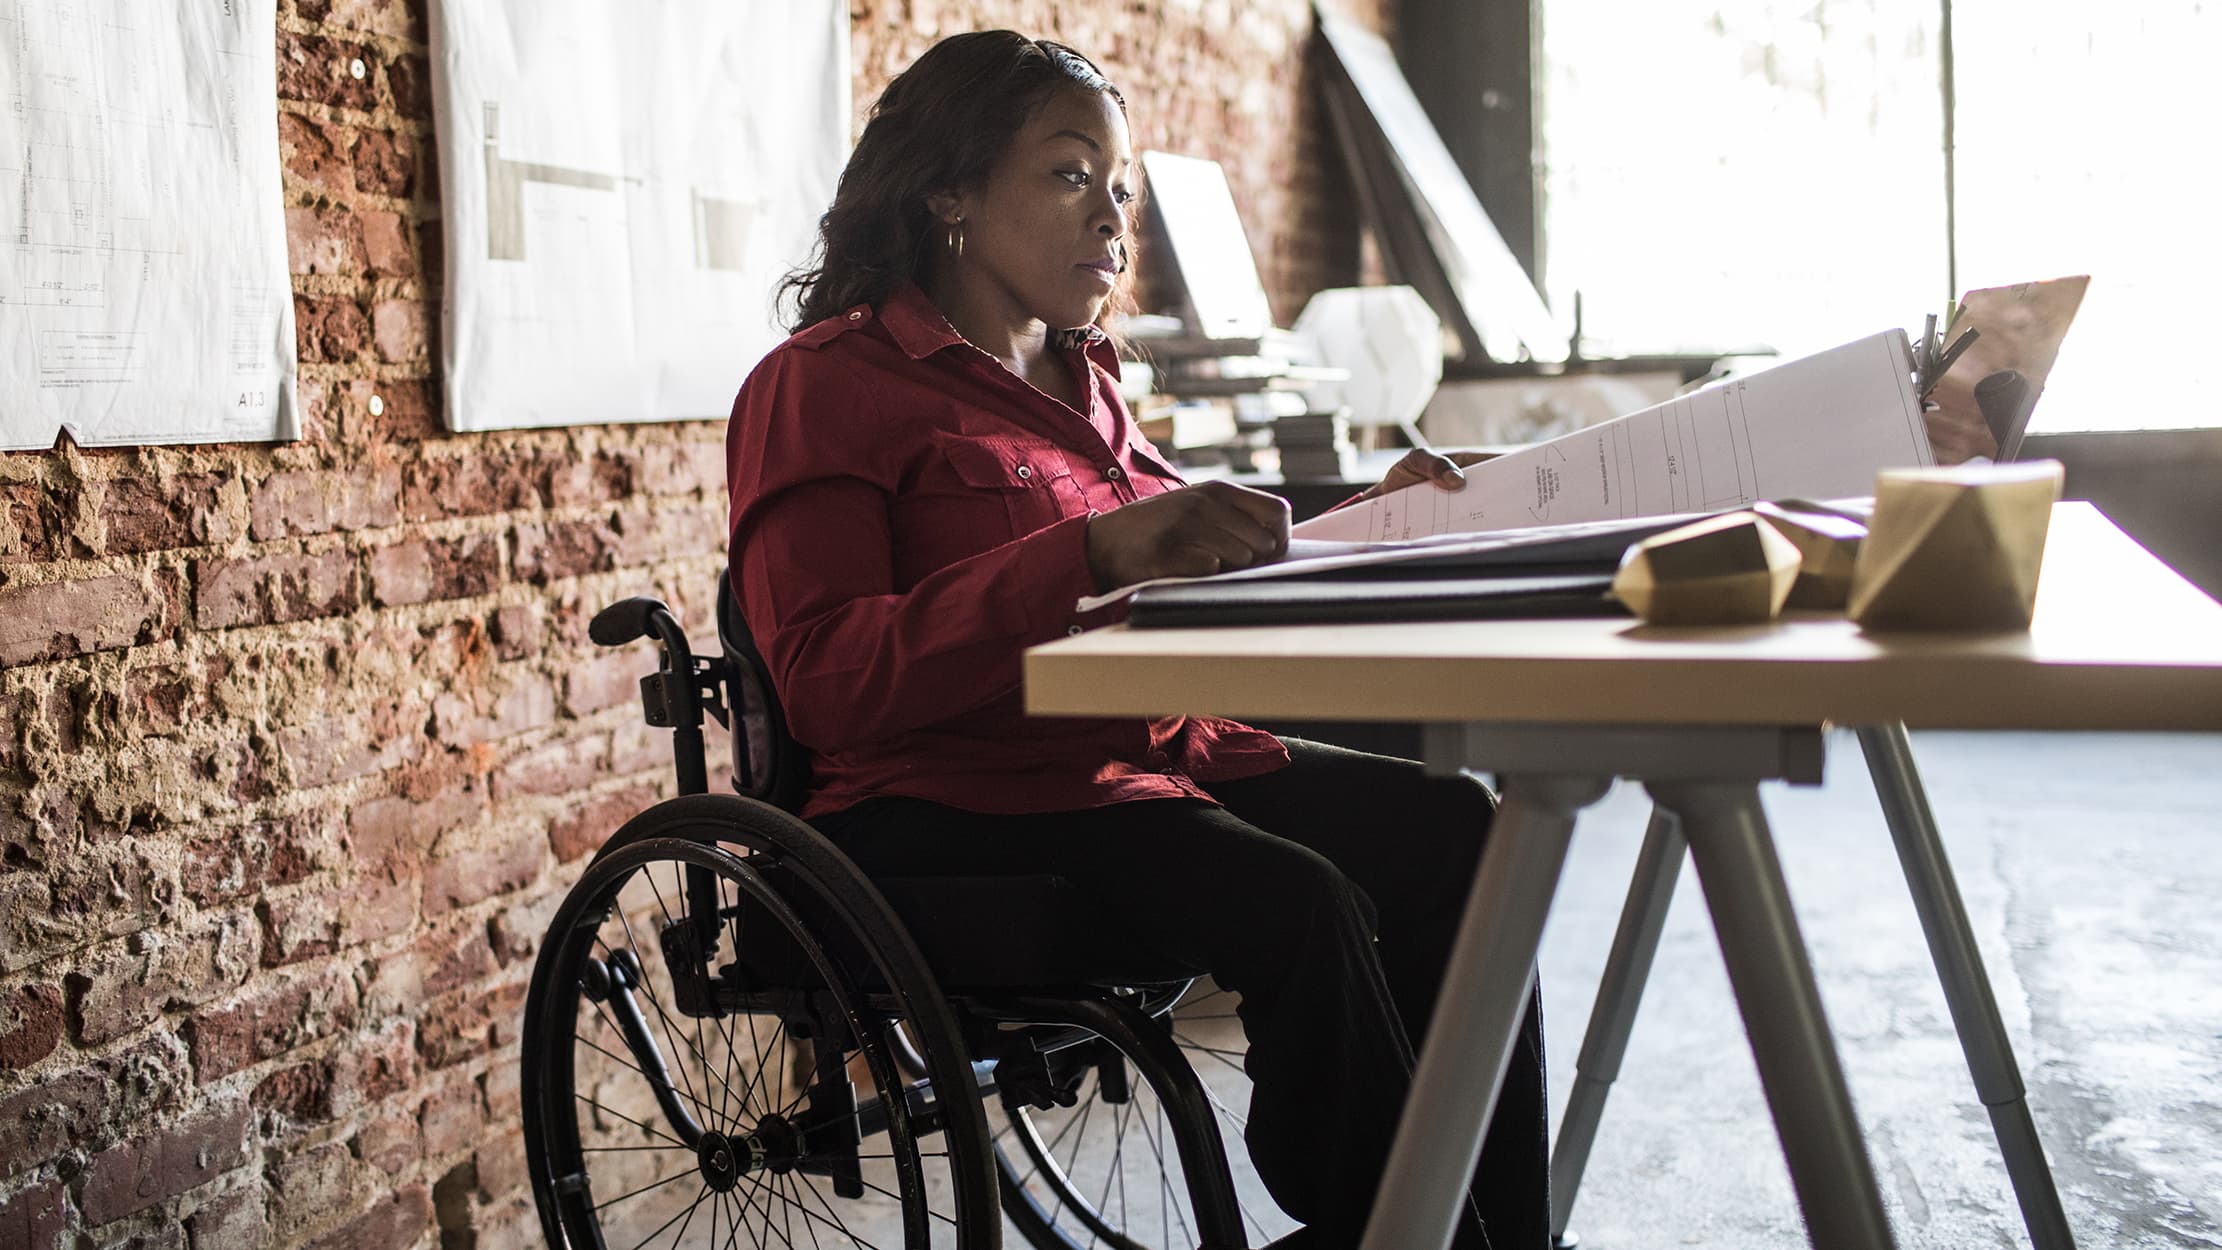 Crippled woman working as secretary